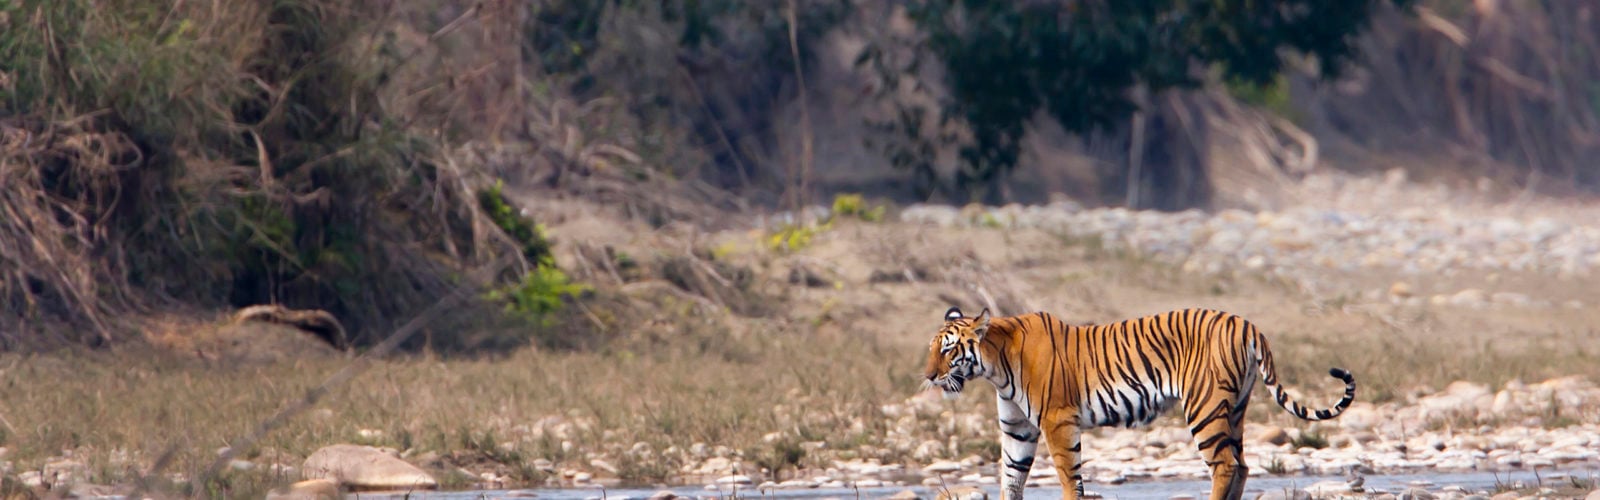 bardia-national-park-nepal-tiger